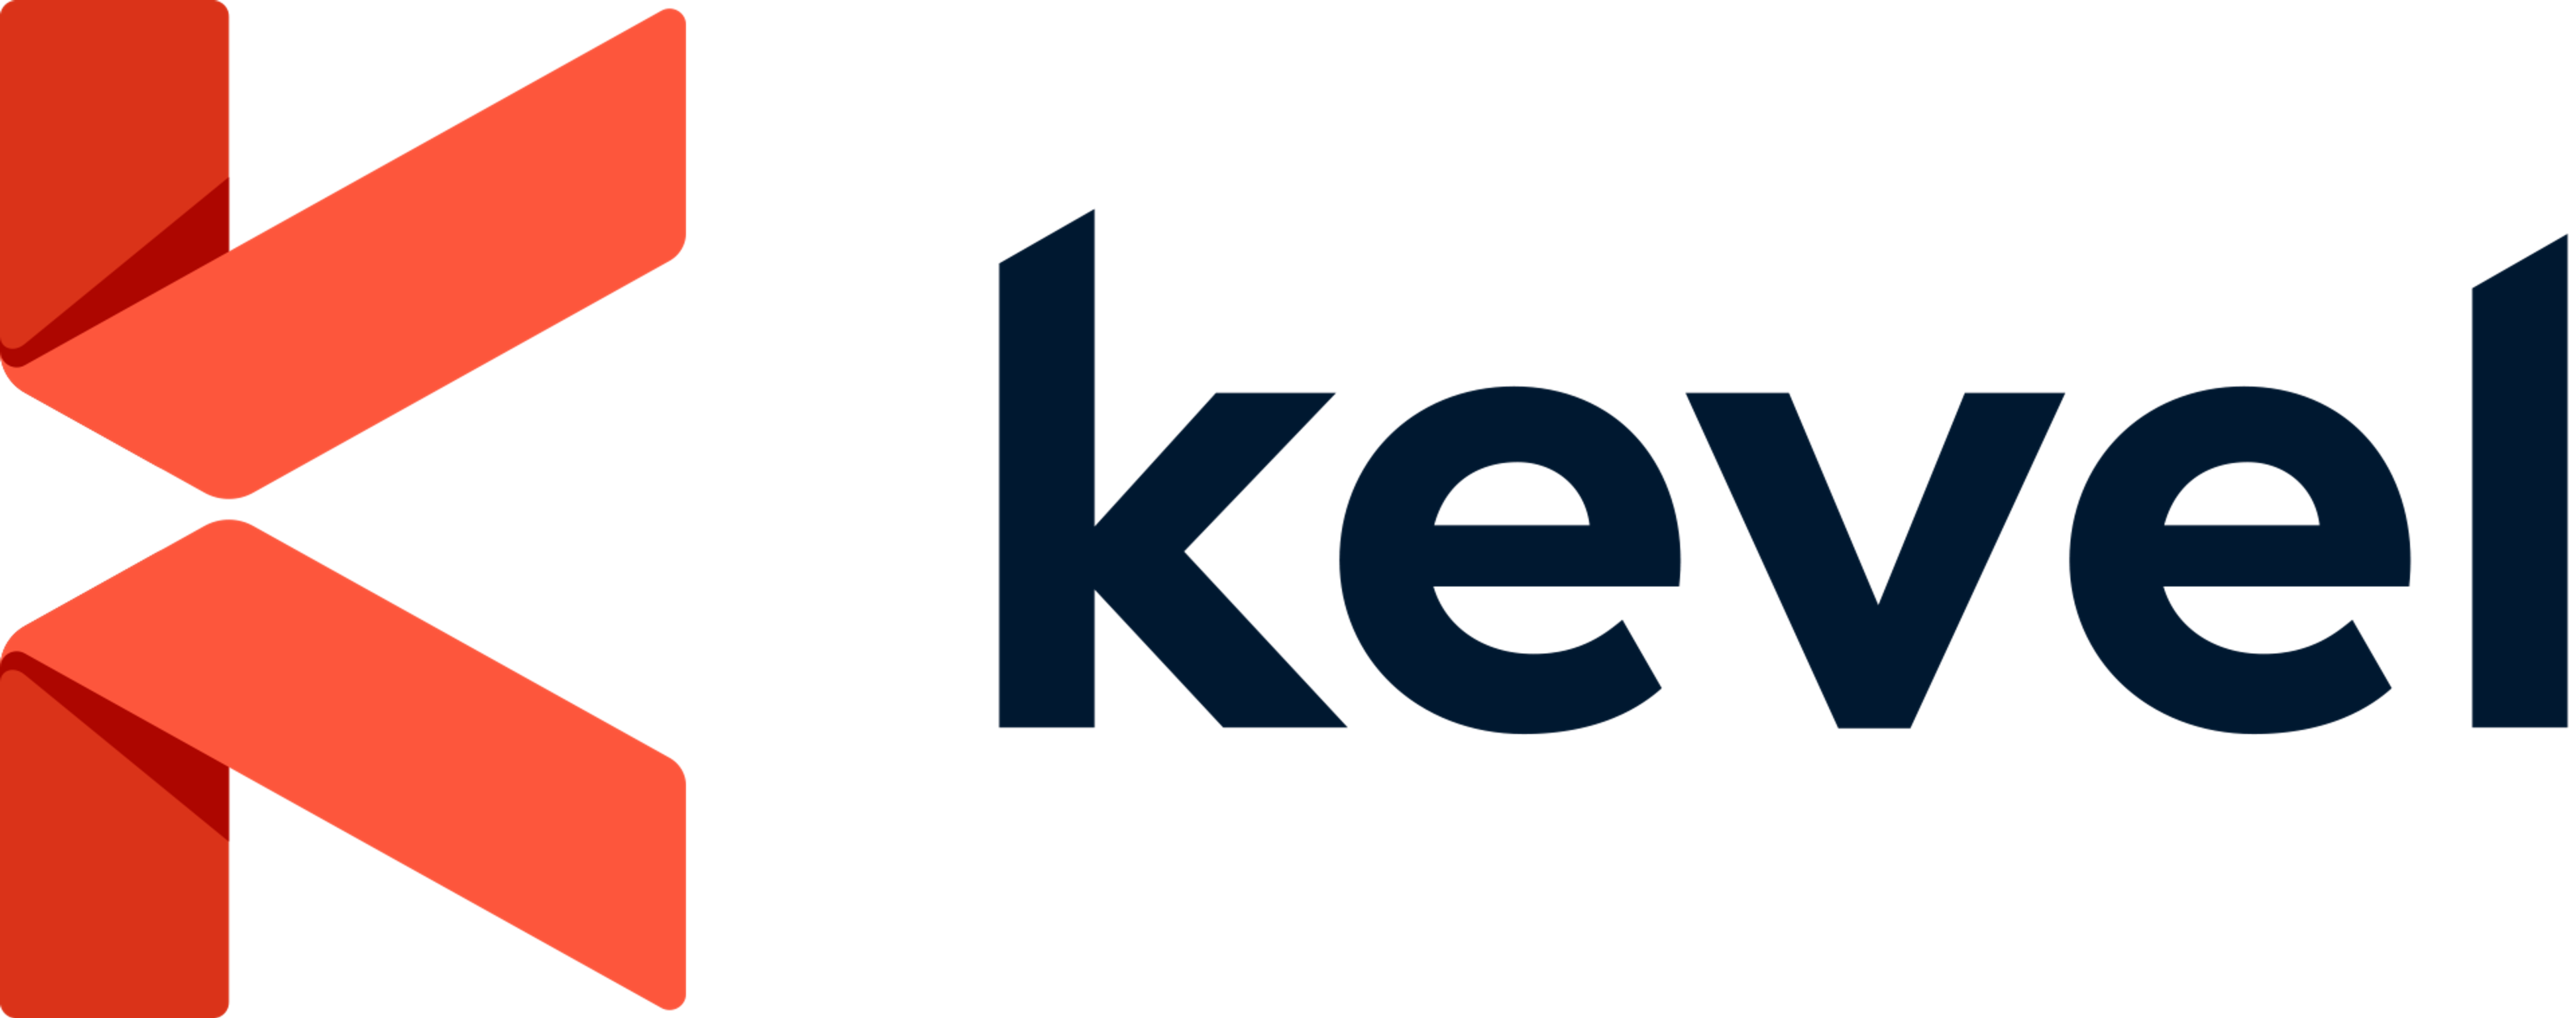 Kevel logo